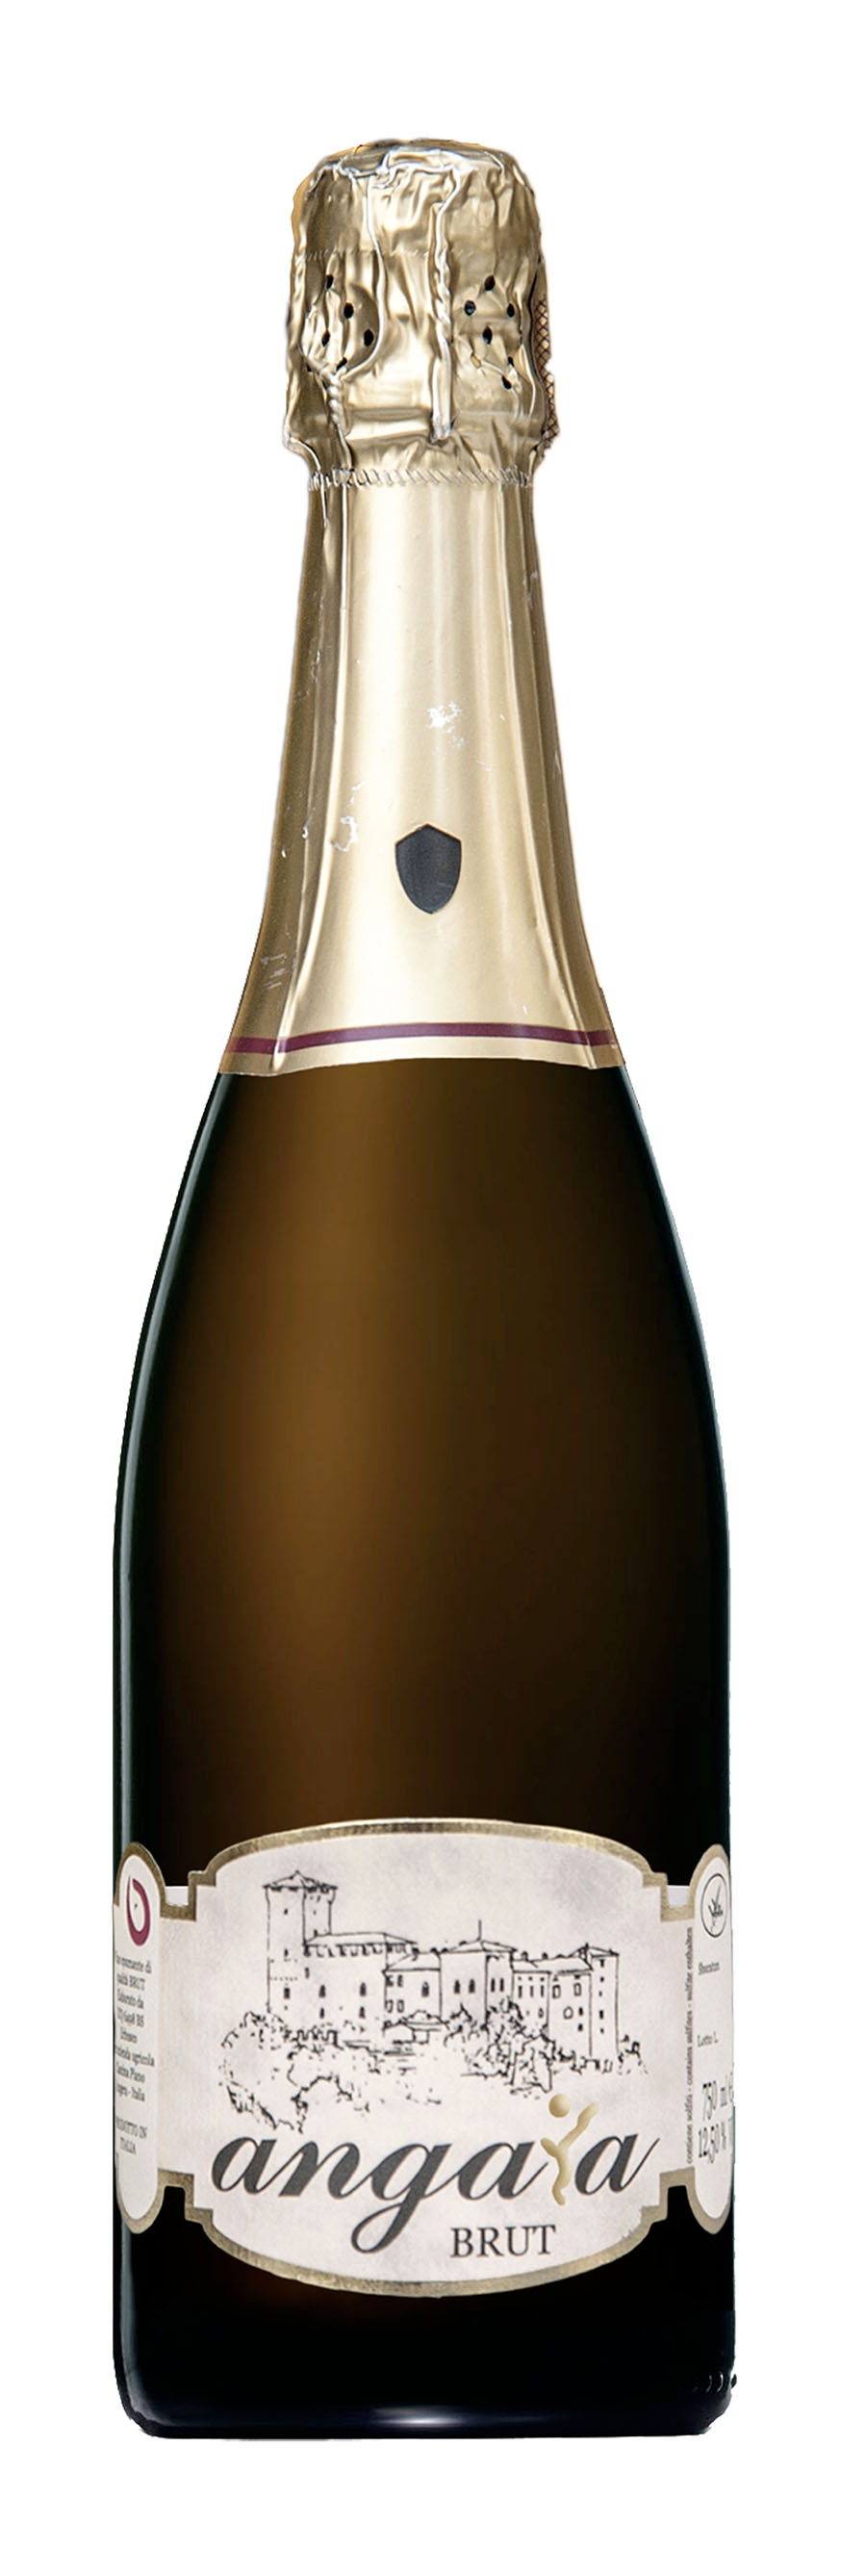 Angaya, our sparkling wine